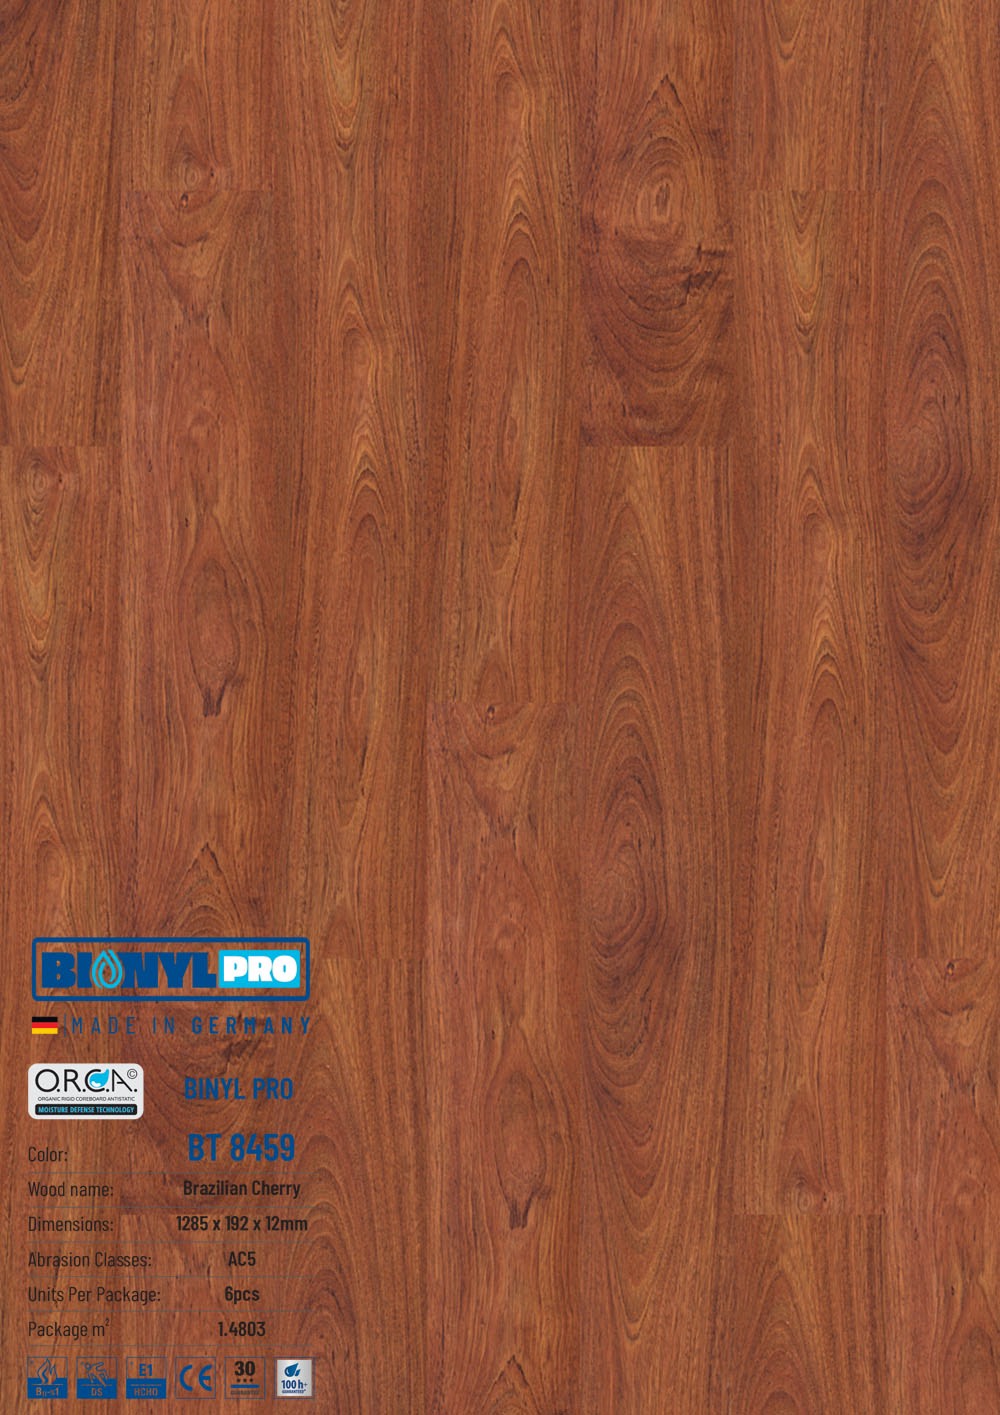 Sàn gỗ Bionyl BT8459